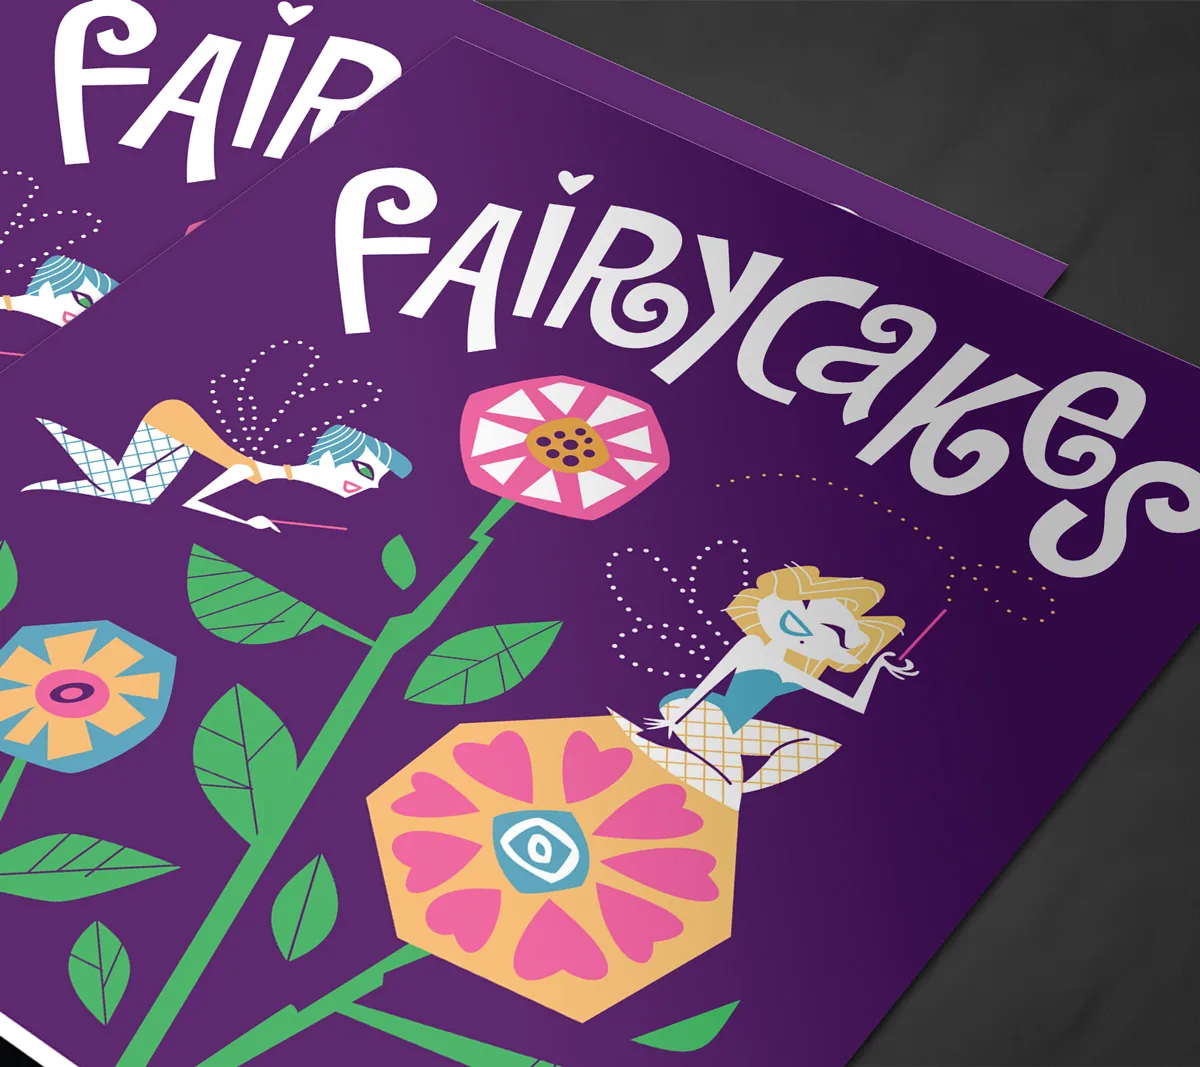 Fairycakes show poster